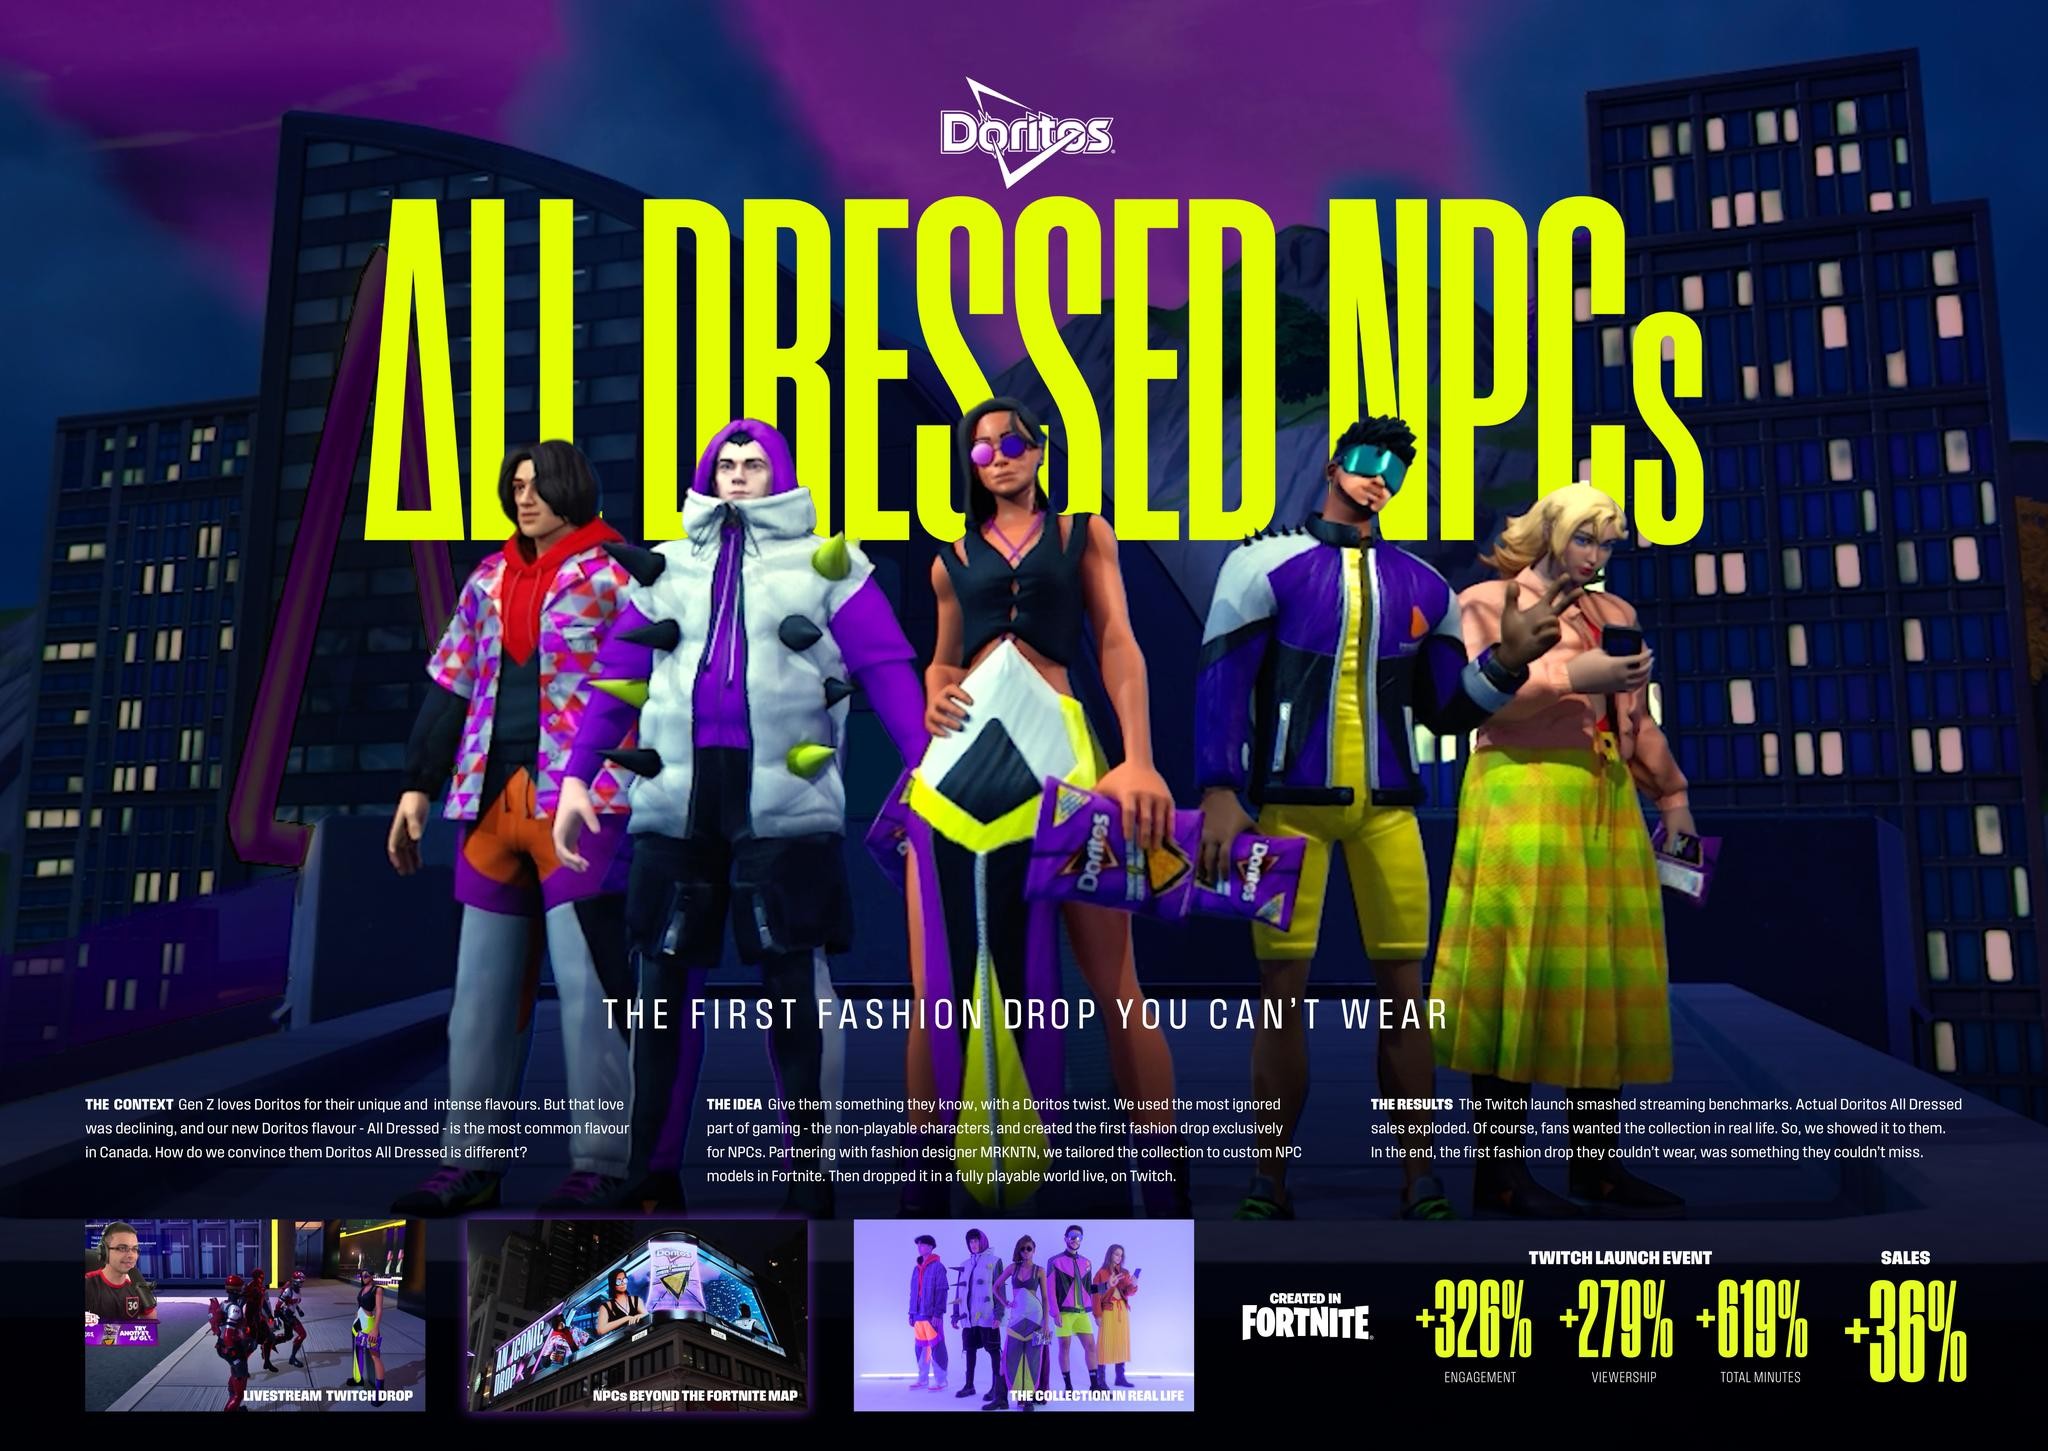 Doritos® All Dressed NPCs